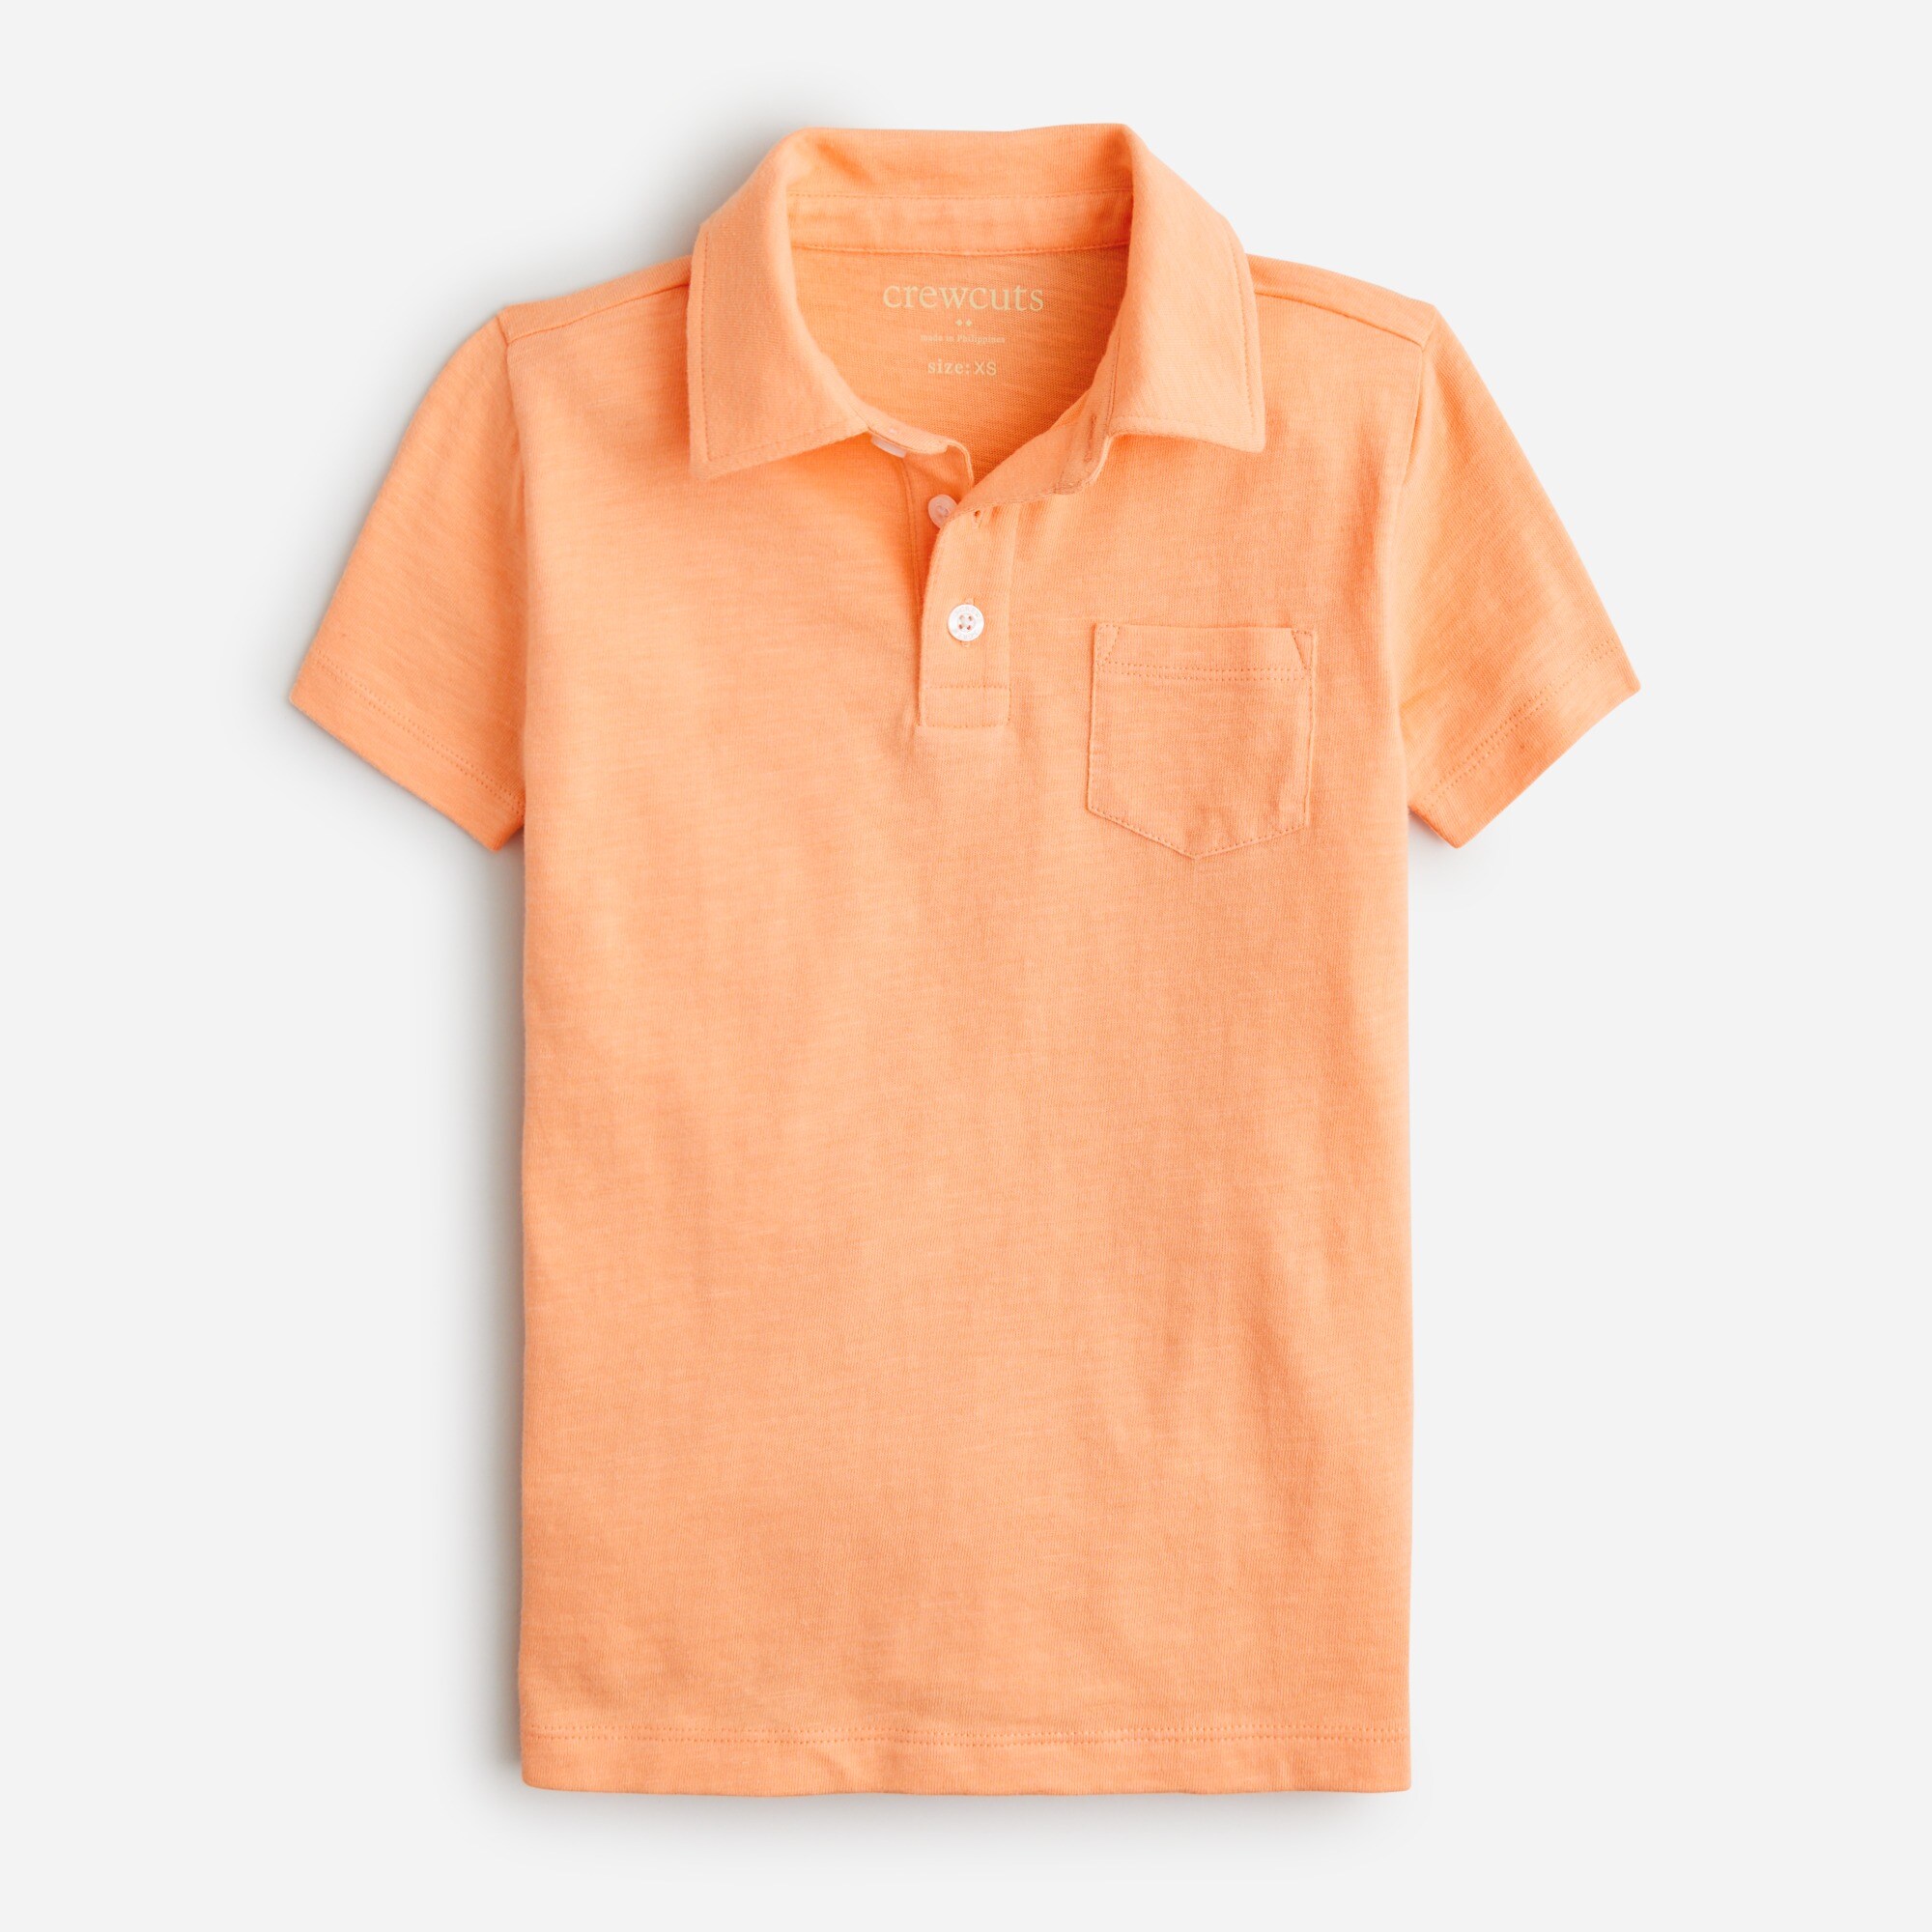  Kids' cotton slub polo shirt